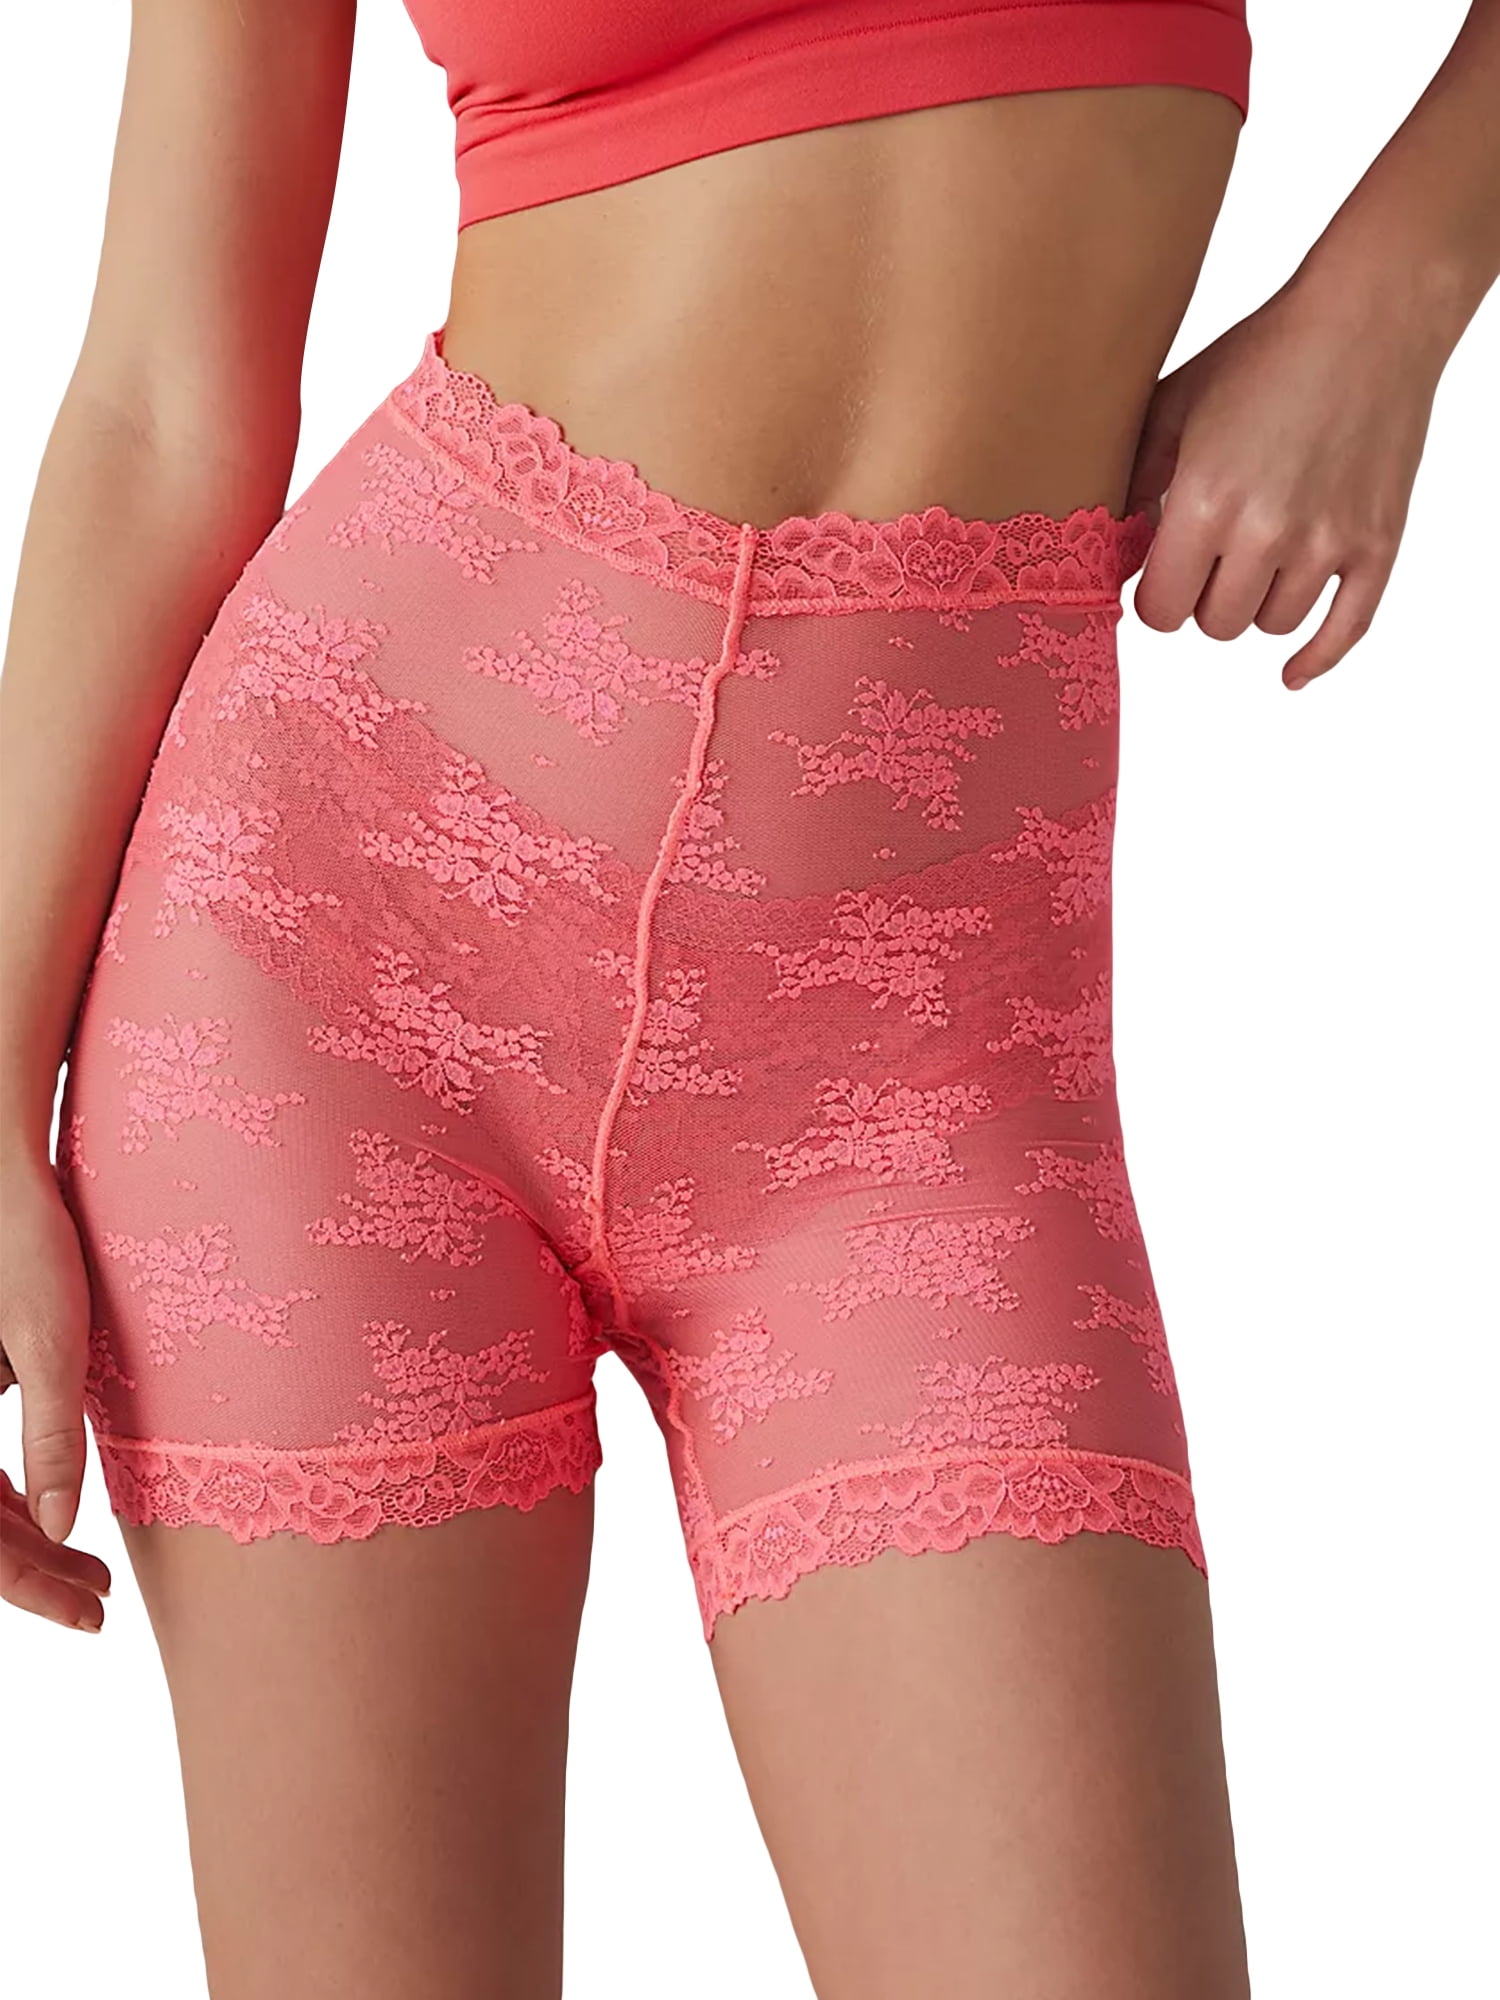 Inevnen Slip Shorts for Under Dresses Women Anti Chafing Underwear Lace See  Through Mesh Sheer Biker Shorts 